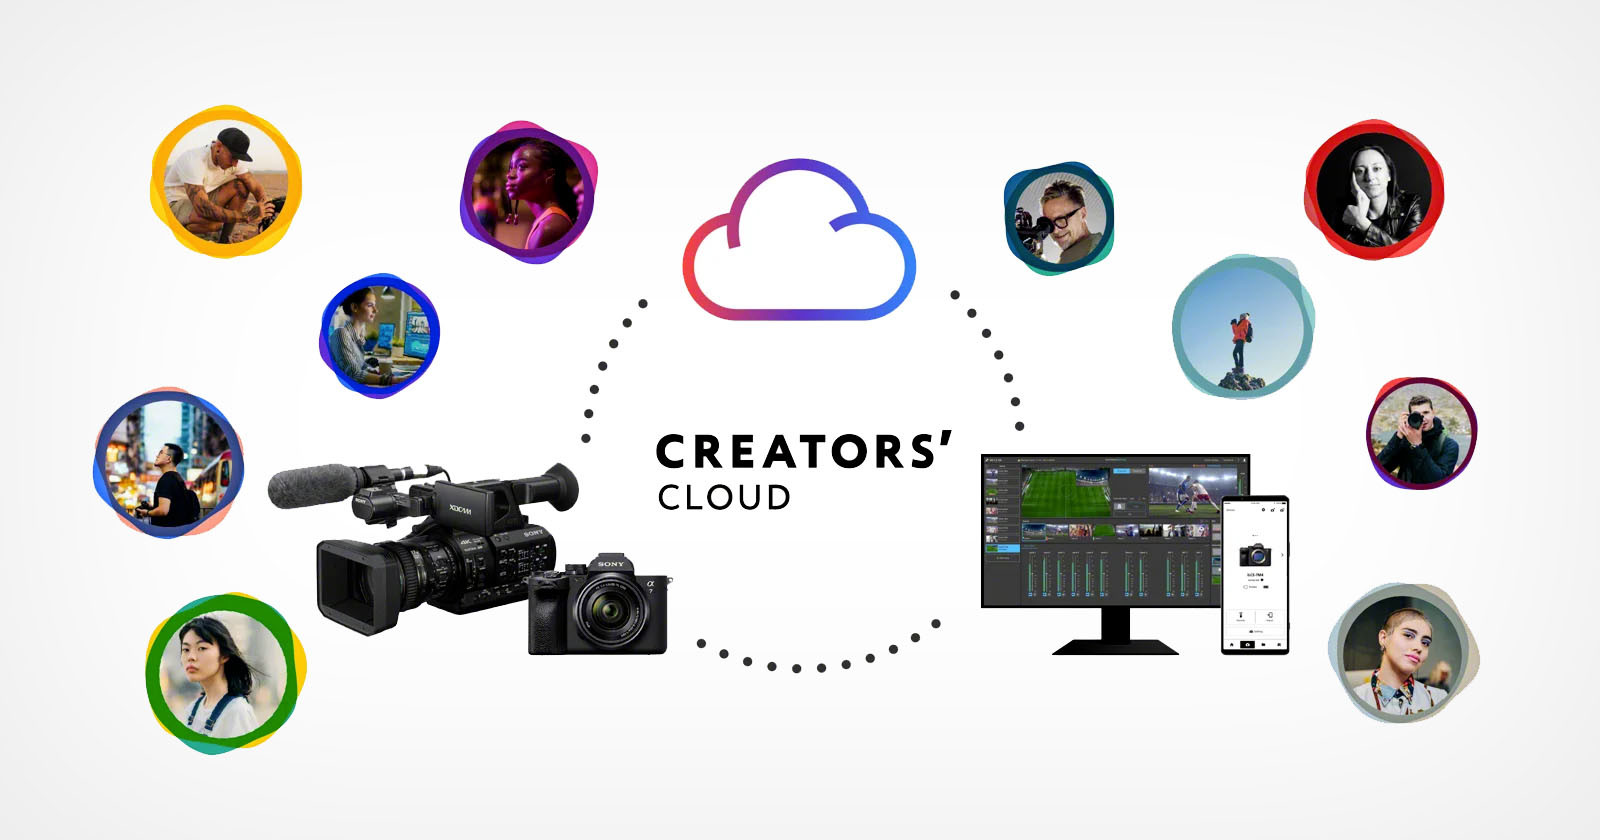  creators cloud sony answer adobe frame camera 